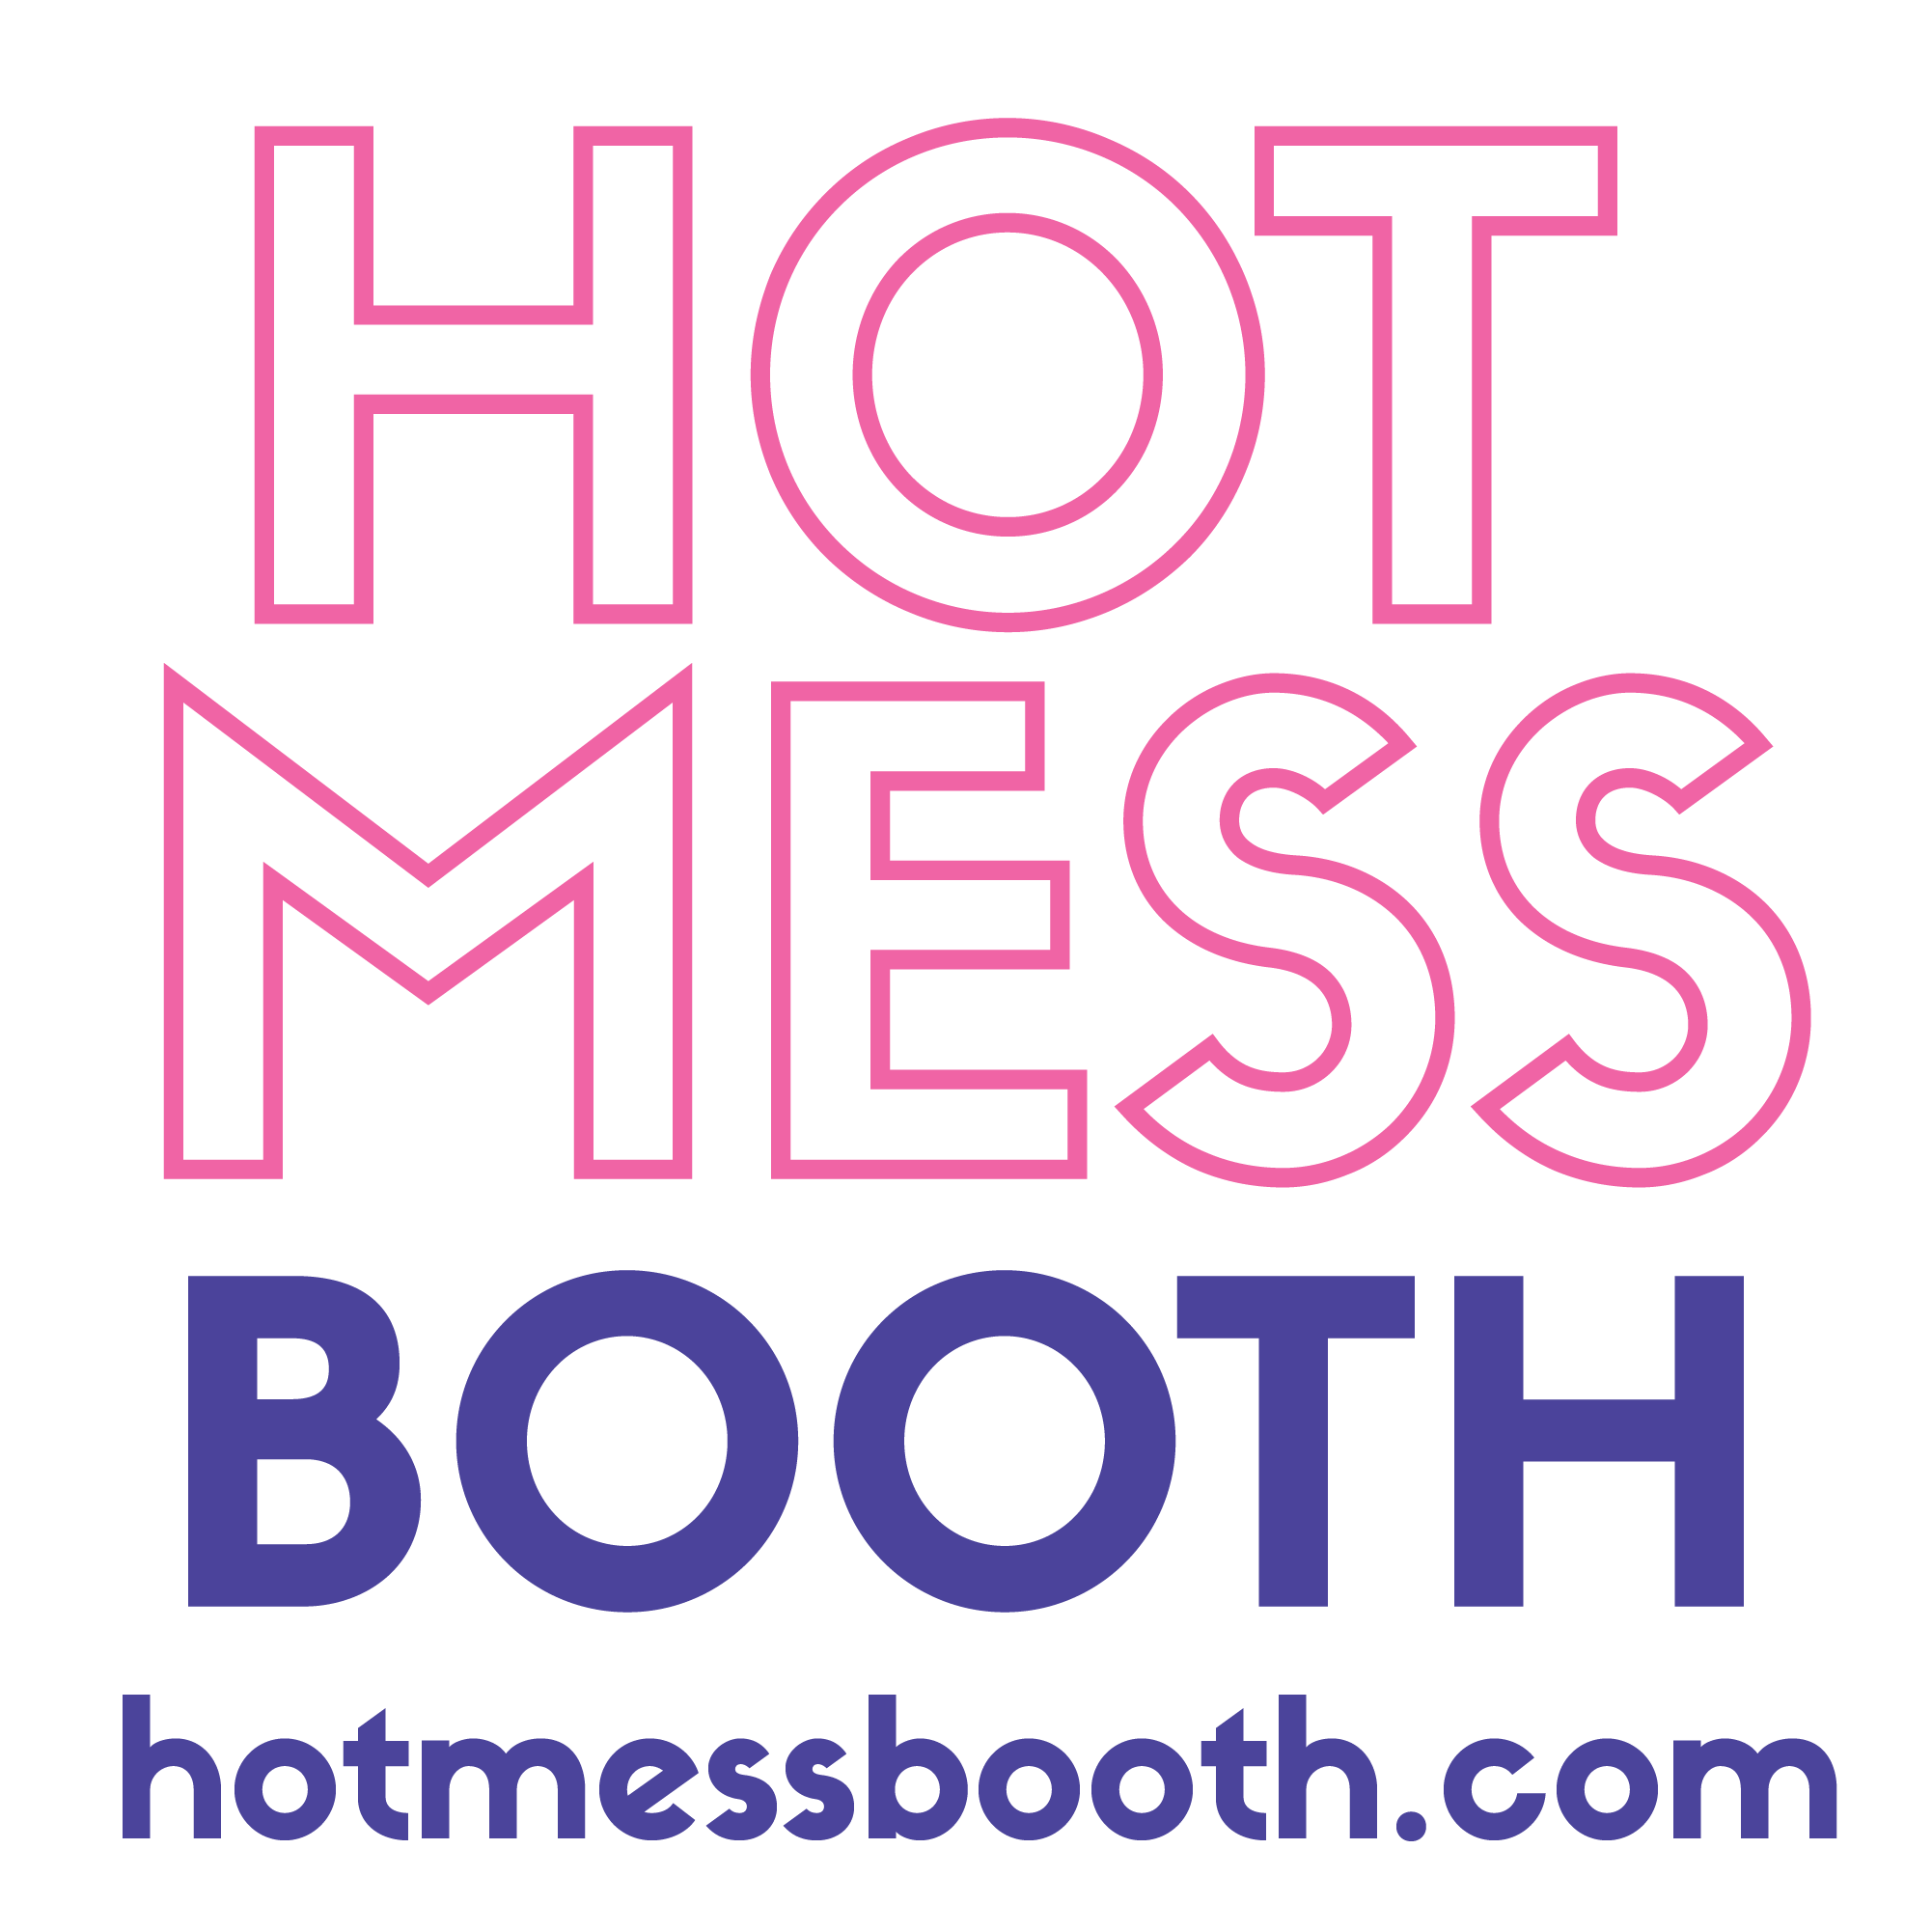 Hot Mess Booth Logo